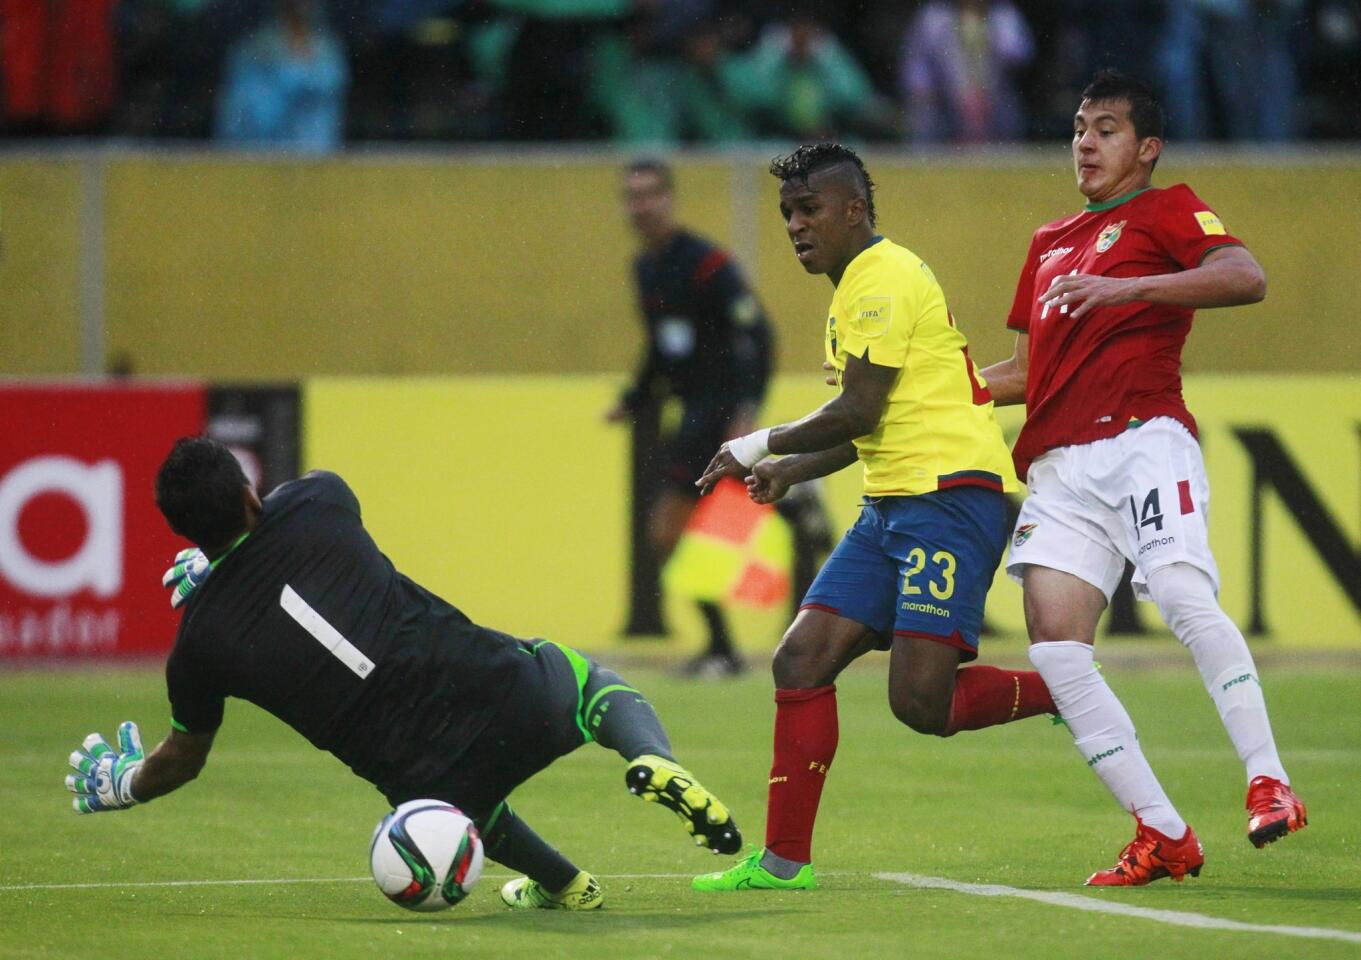 Bolivia's Vaca fails to catch the ball as Ecuador's Bolanos scores next to Bolivia's Flores during their 2018 World Cup qualifying soccer match at the Atahualpa stadium in Quito